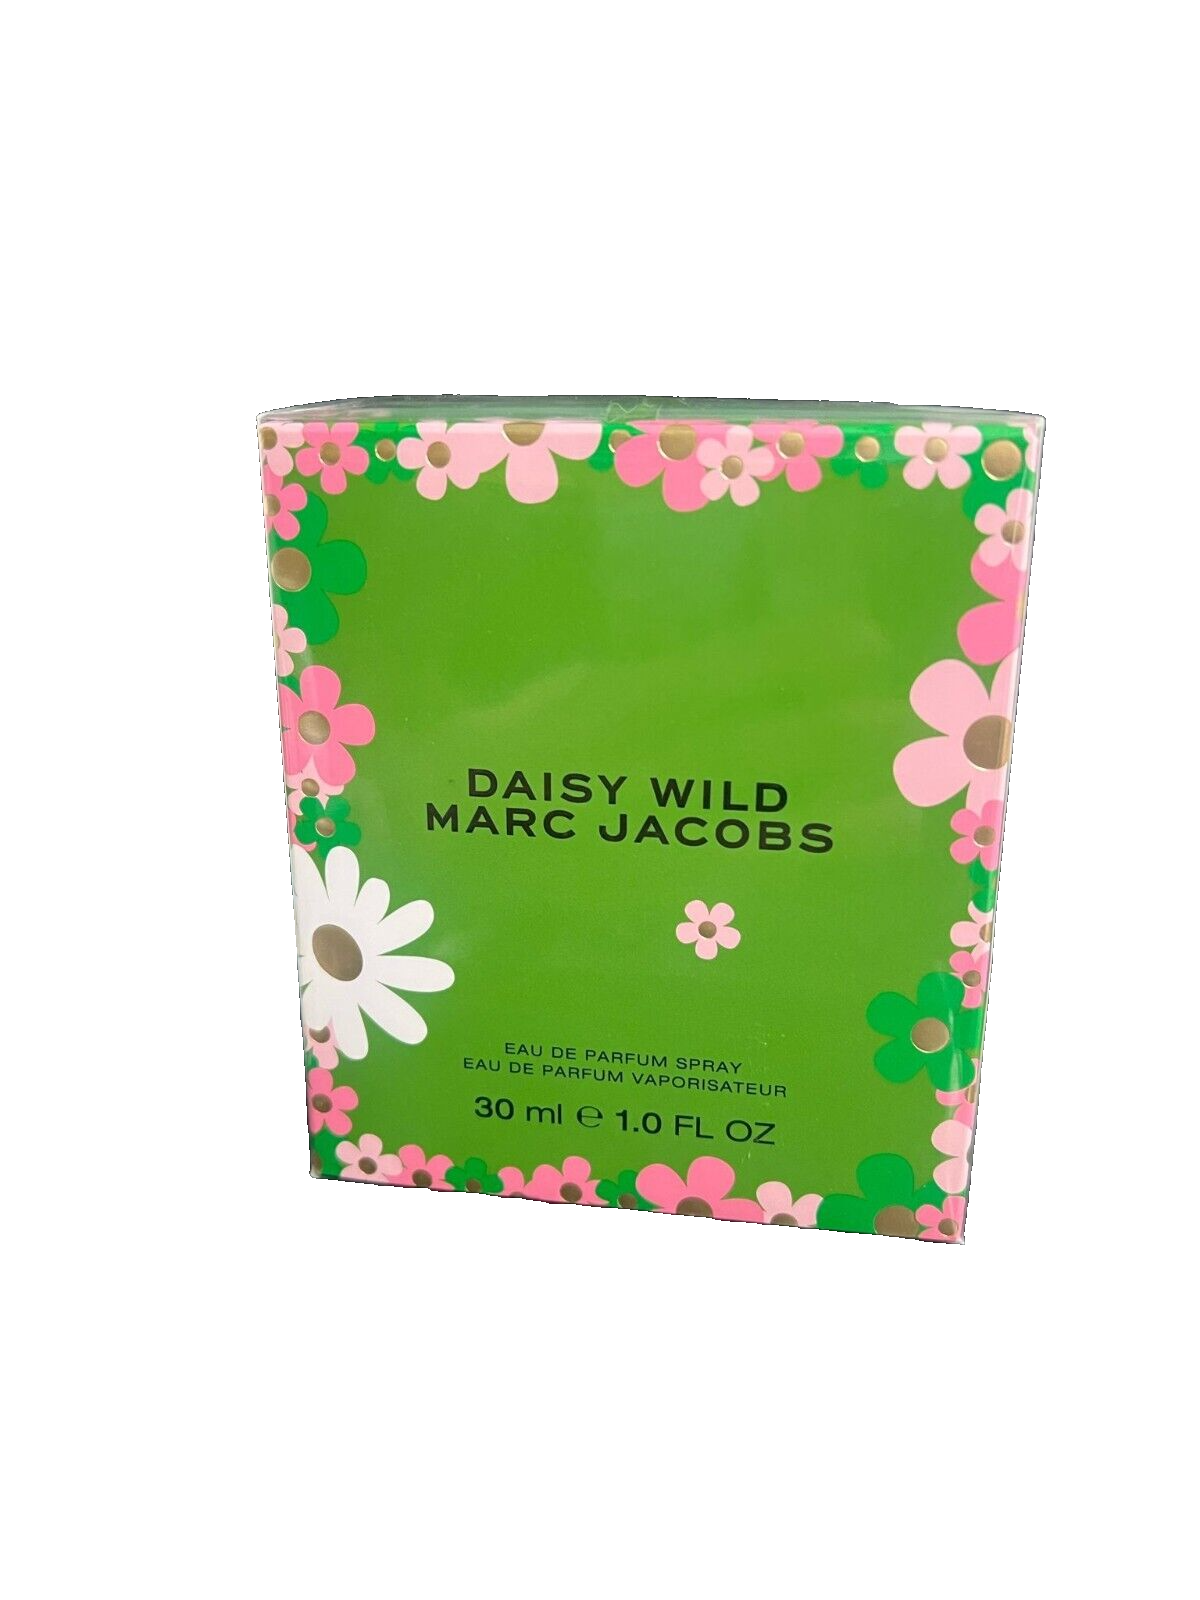 Daisy Wild Marc Jacobs Eau De Parfum Spray 1.0 FL Oz - $79.19